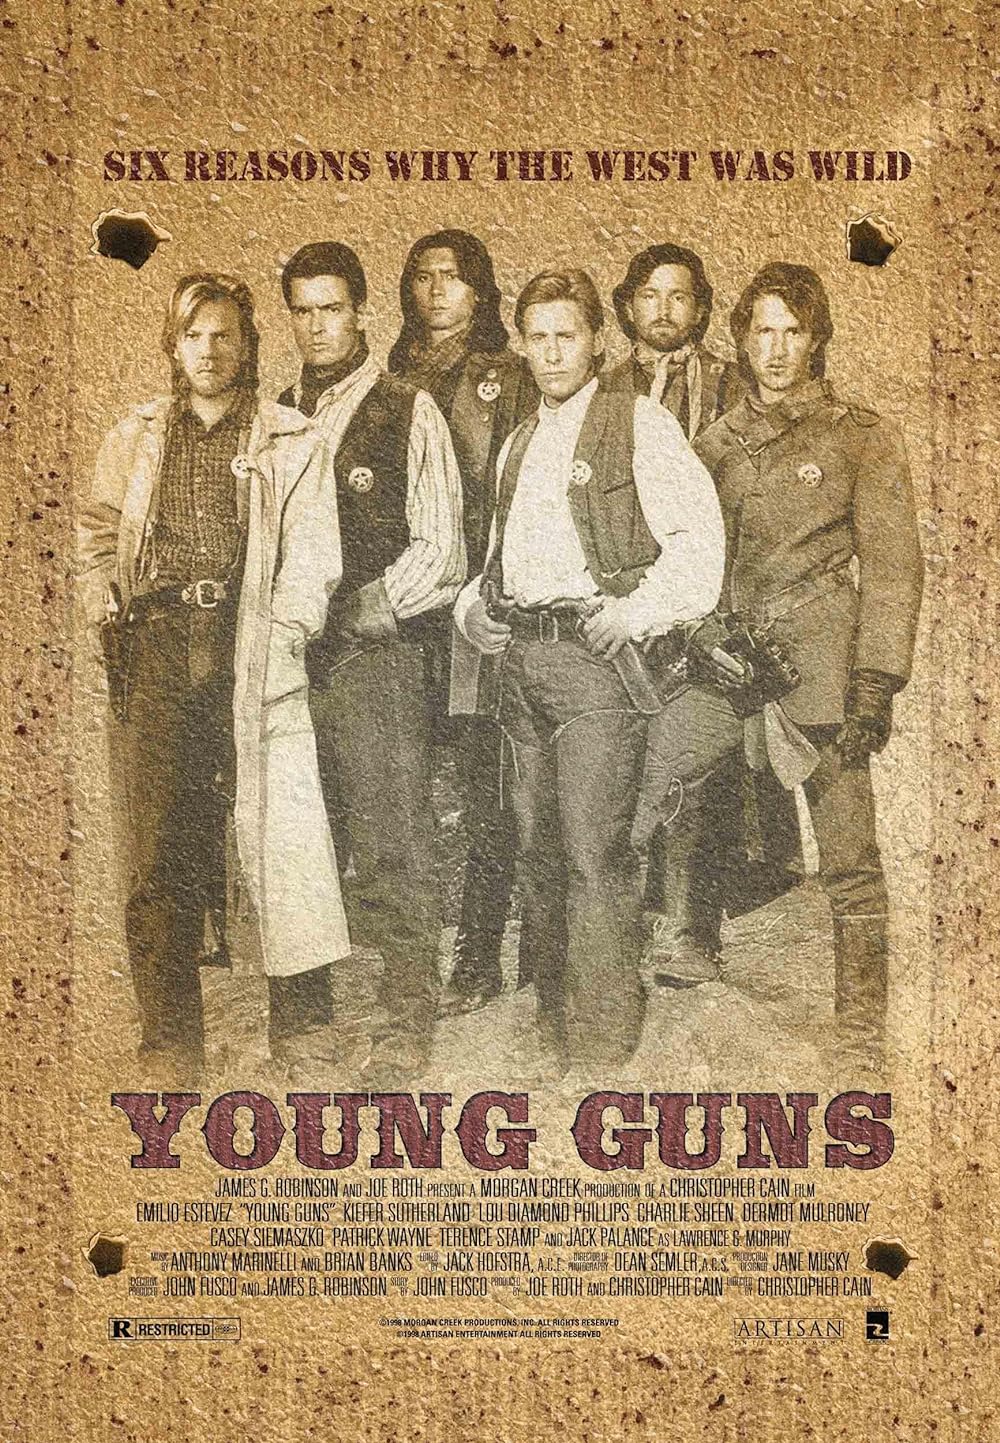 Young Guns (1988) 2113Kbps 23.976Fps 48Khz BluRay DTS-HD MA 2.0Ch Turkish Audio TAC